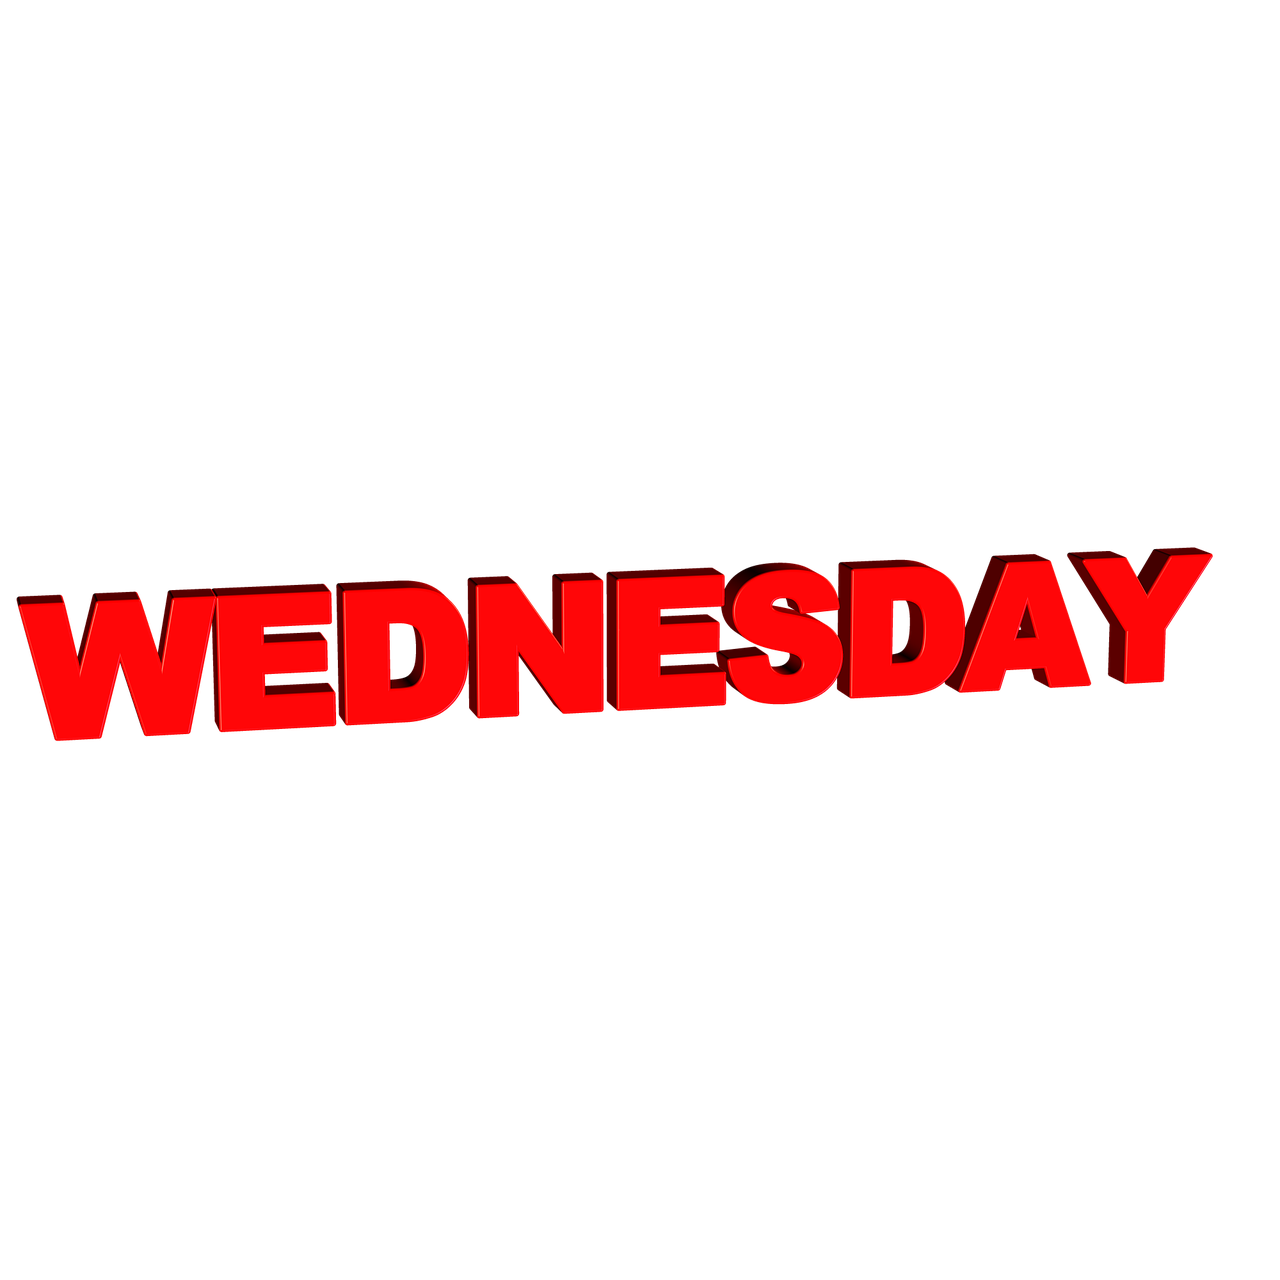 Wednesday day week calendar word free image from needpix com